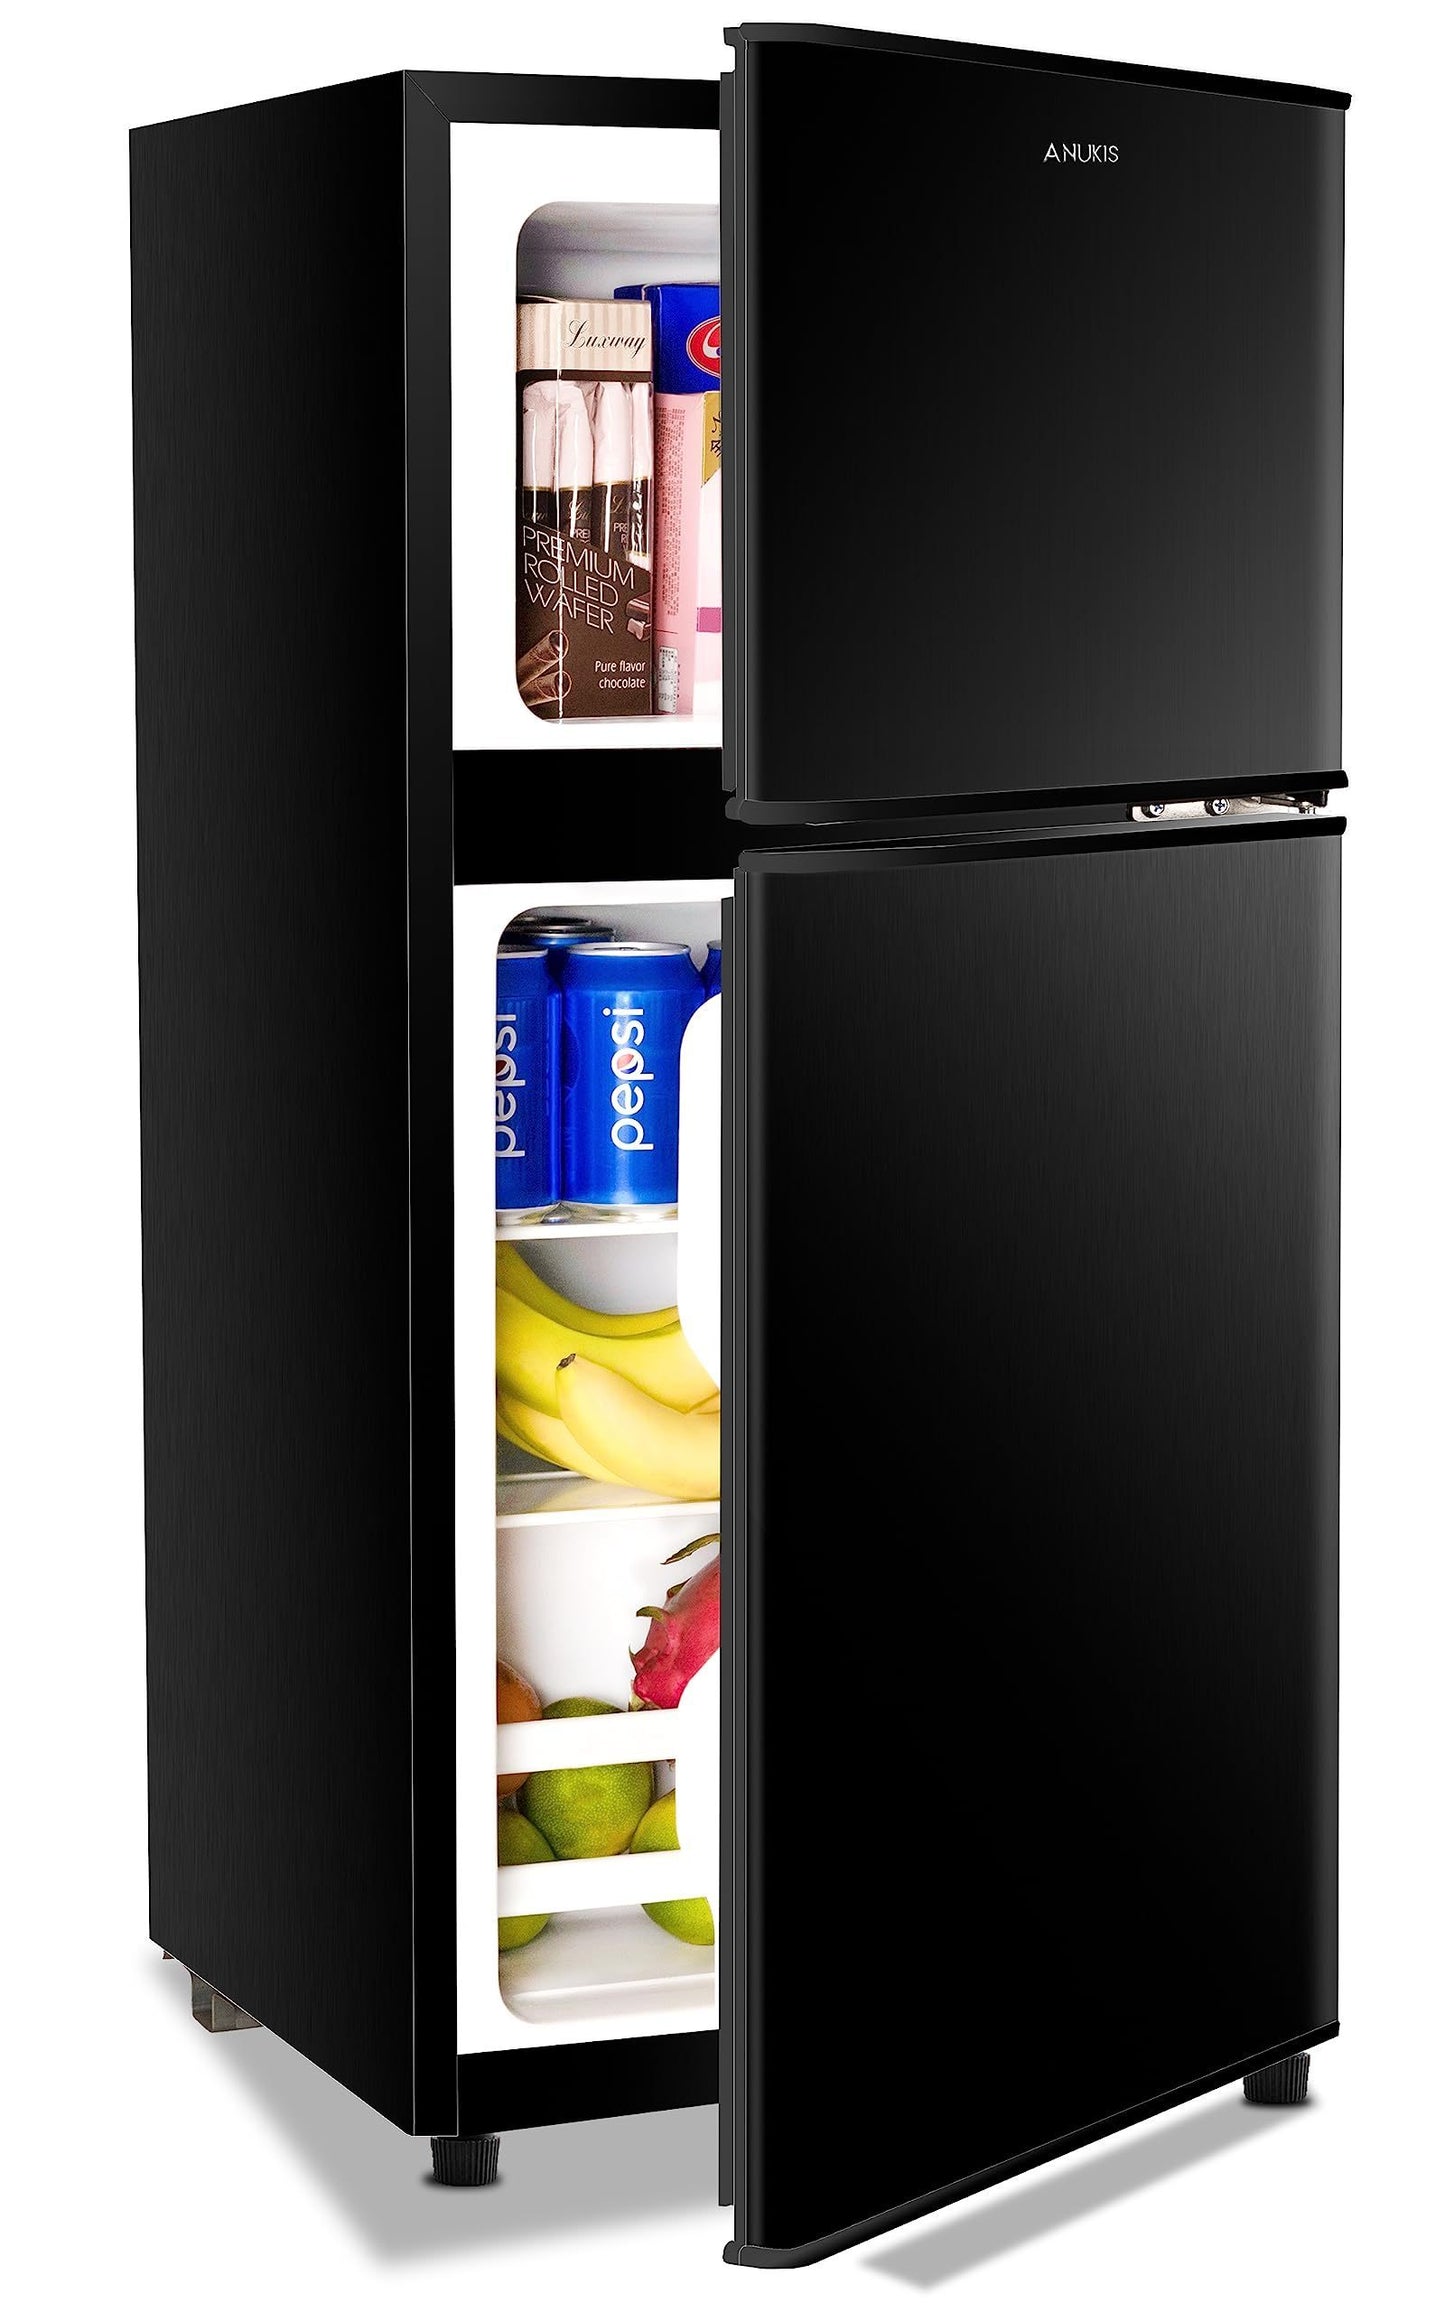 3.5 Cu.Ft Compact Refrigerator Mini Fridge with Freezer, Two-Door Design, Adjustable Thermostat, Removable Shelves